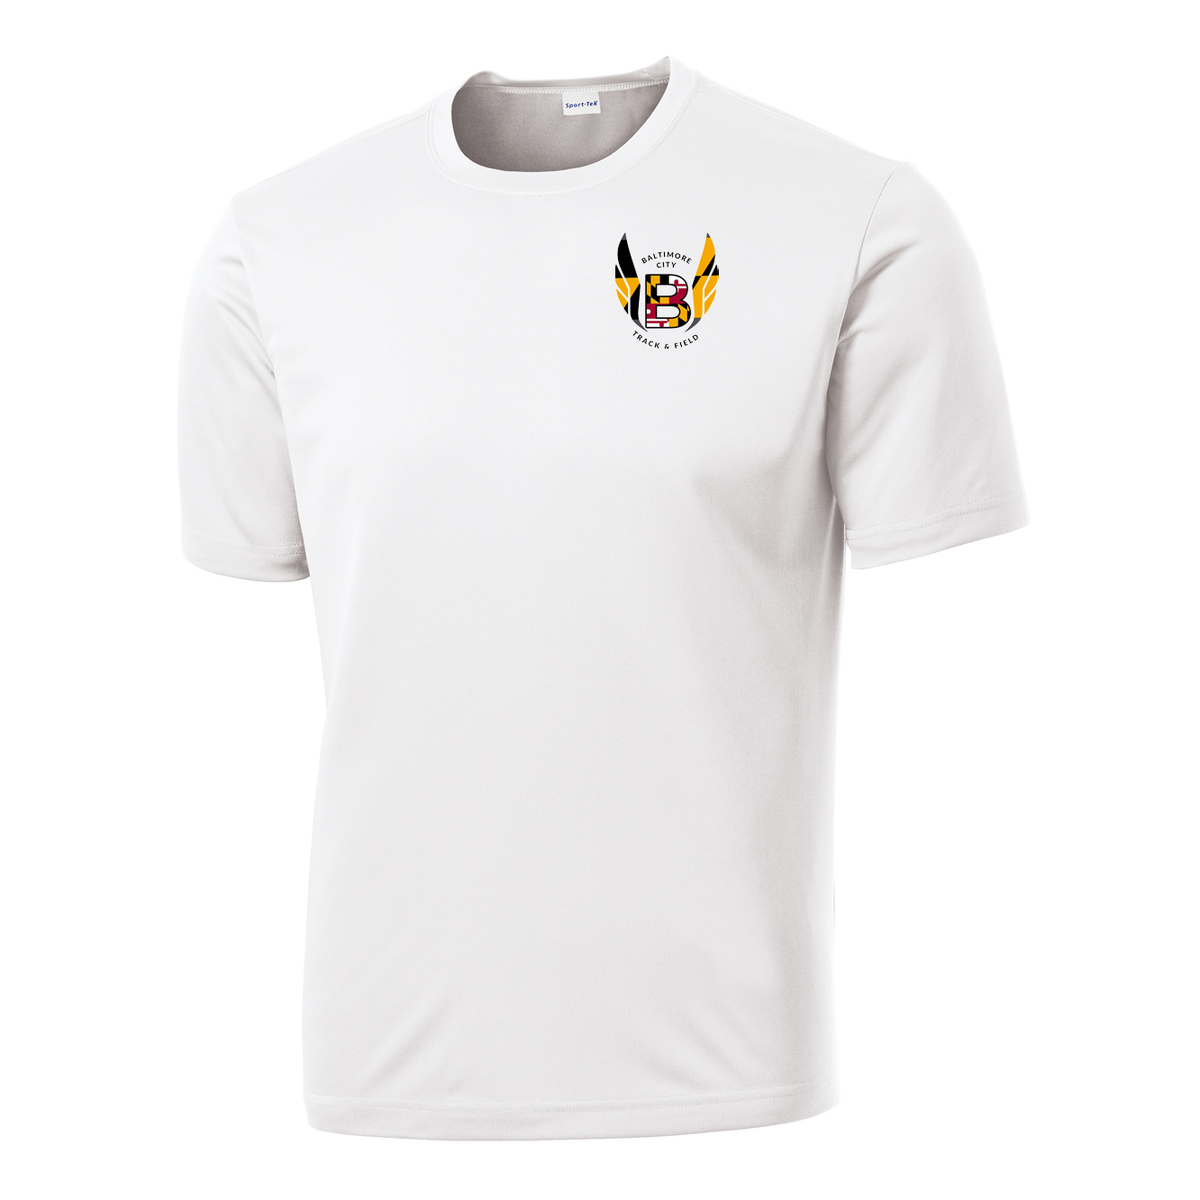 Baltimore City Track & Field Club T-Shirt